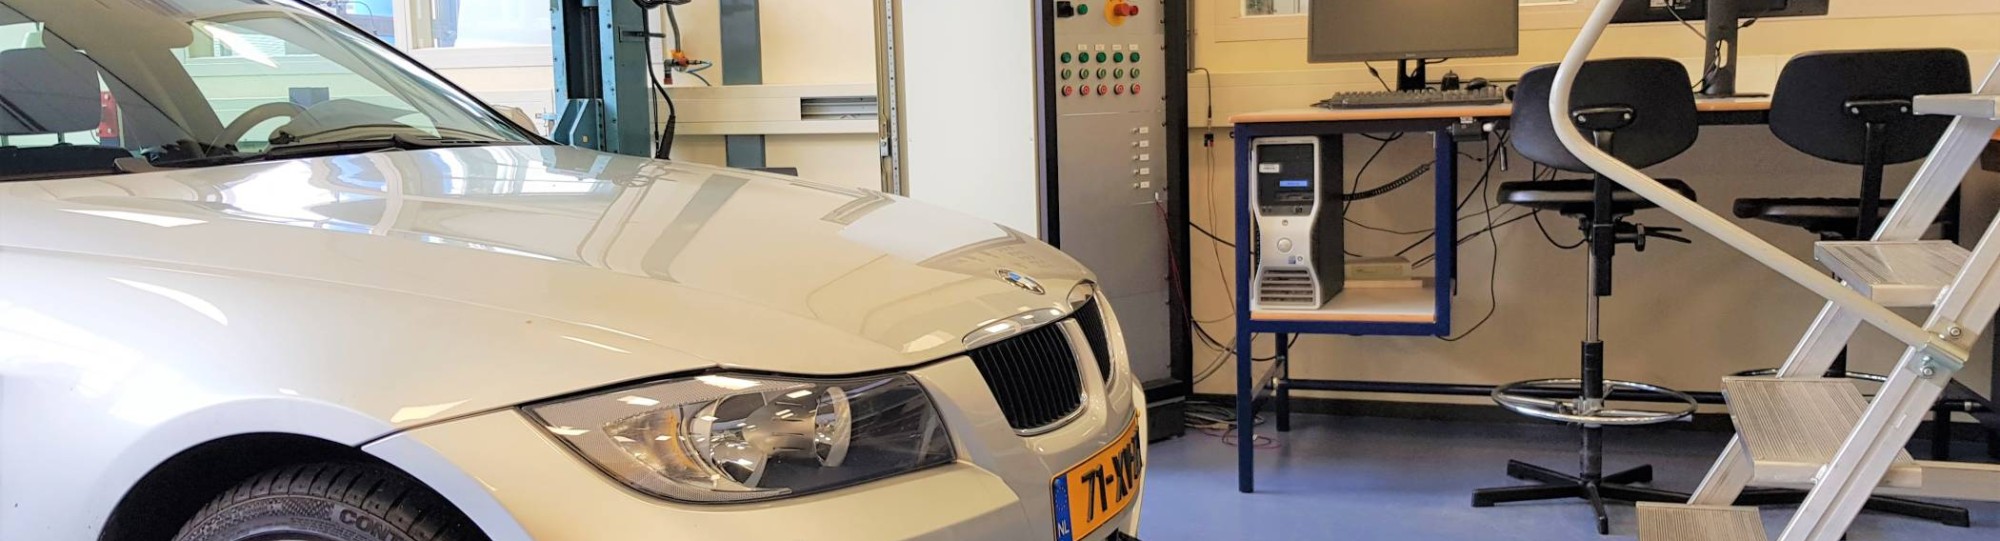 automotive testopstelling BMW